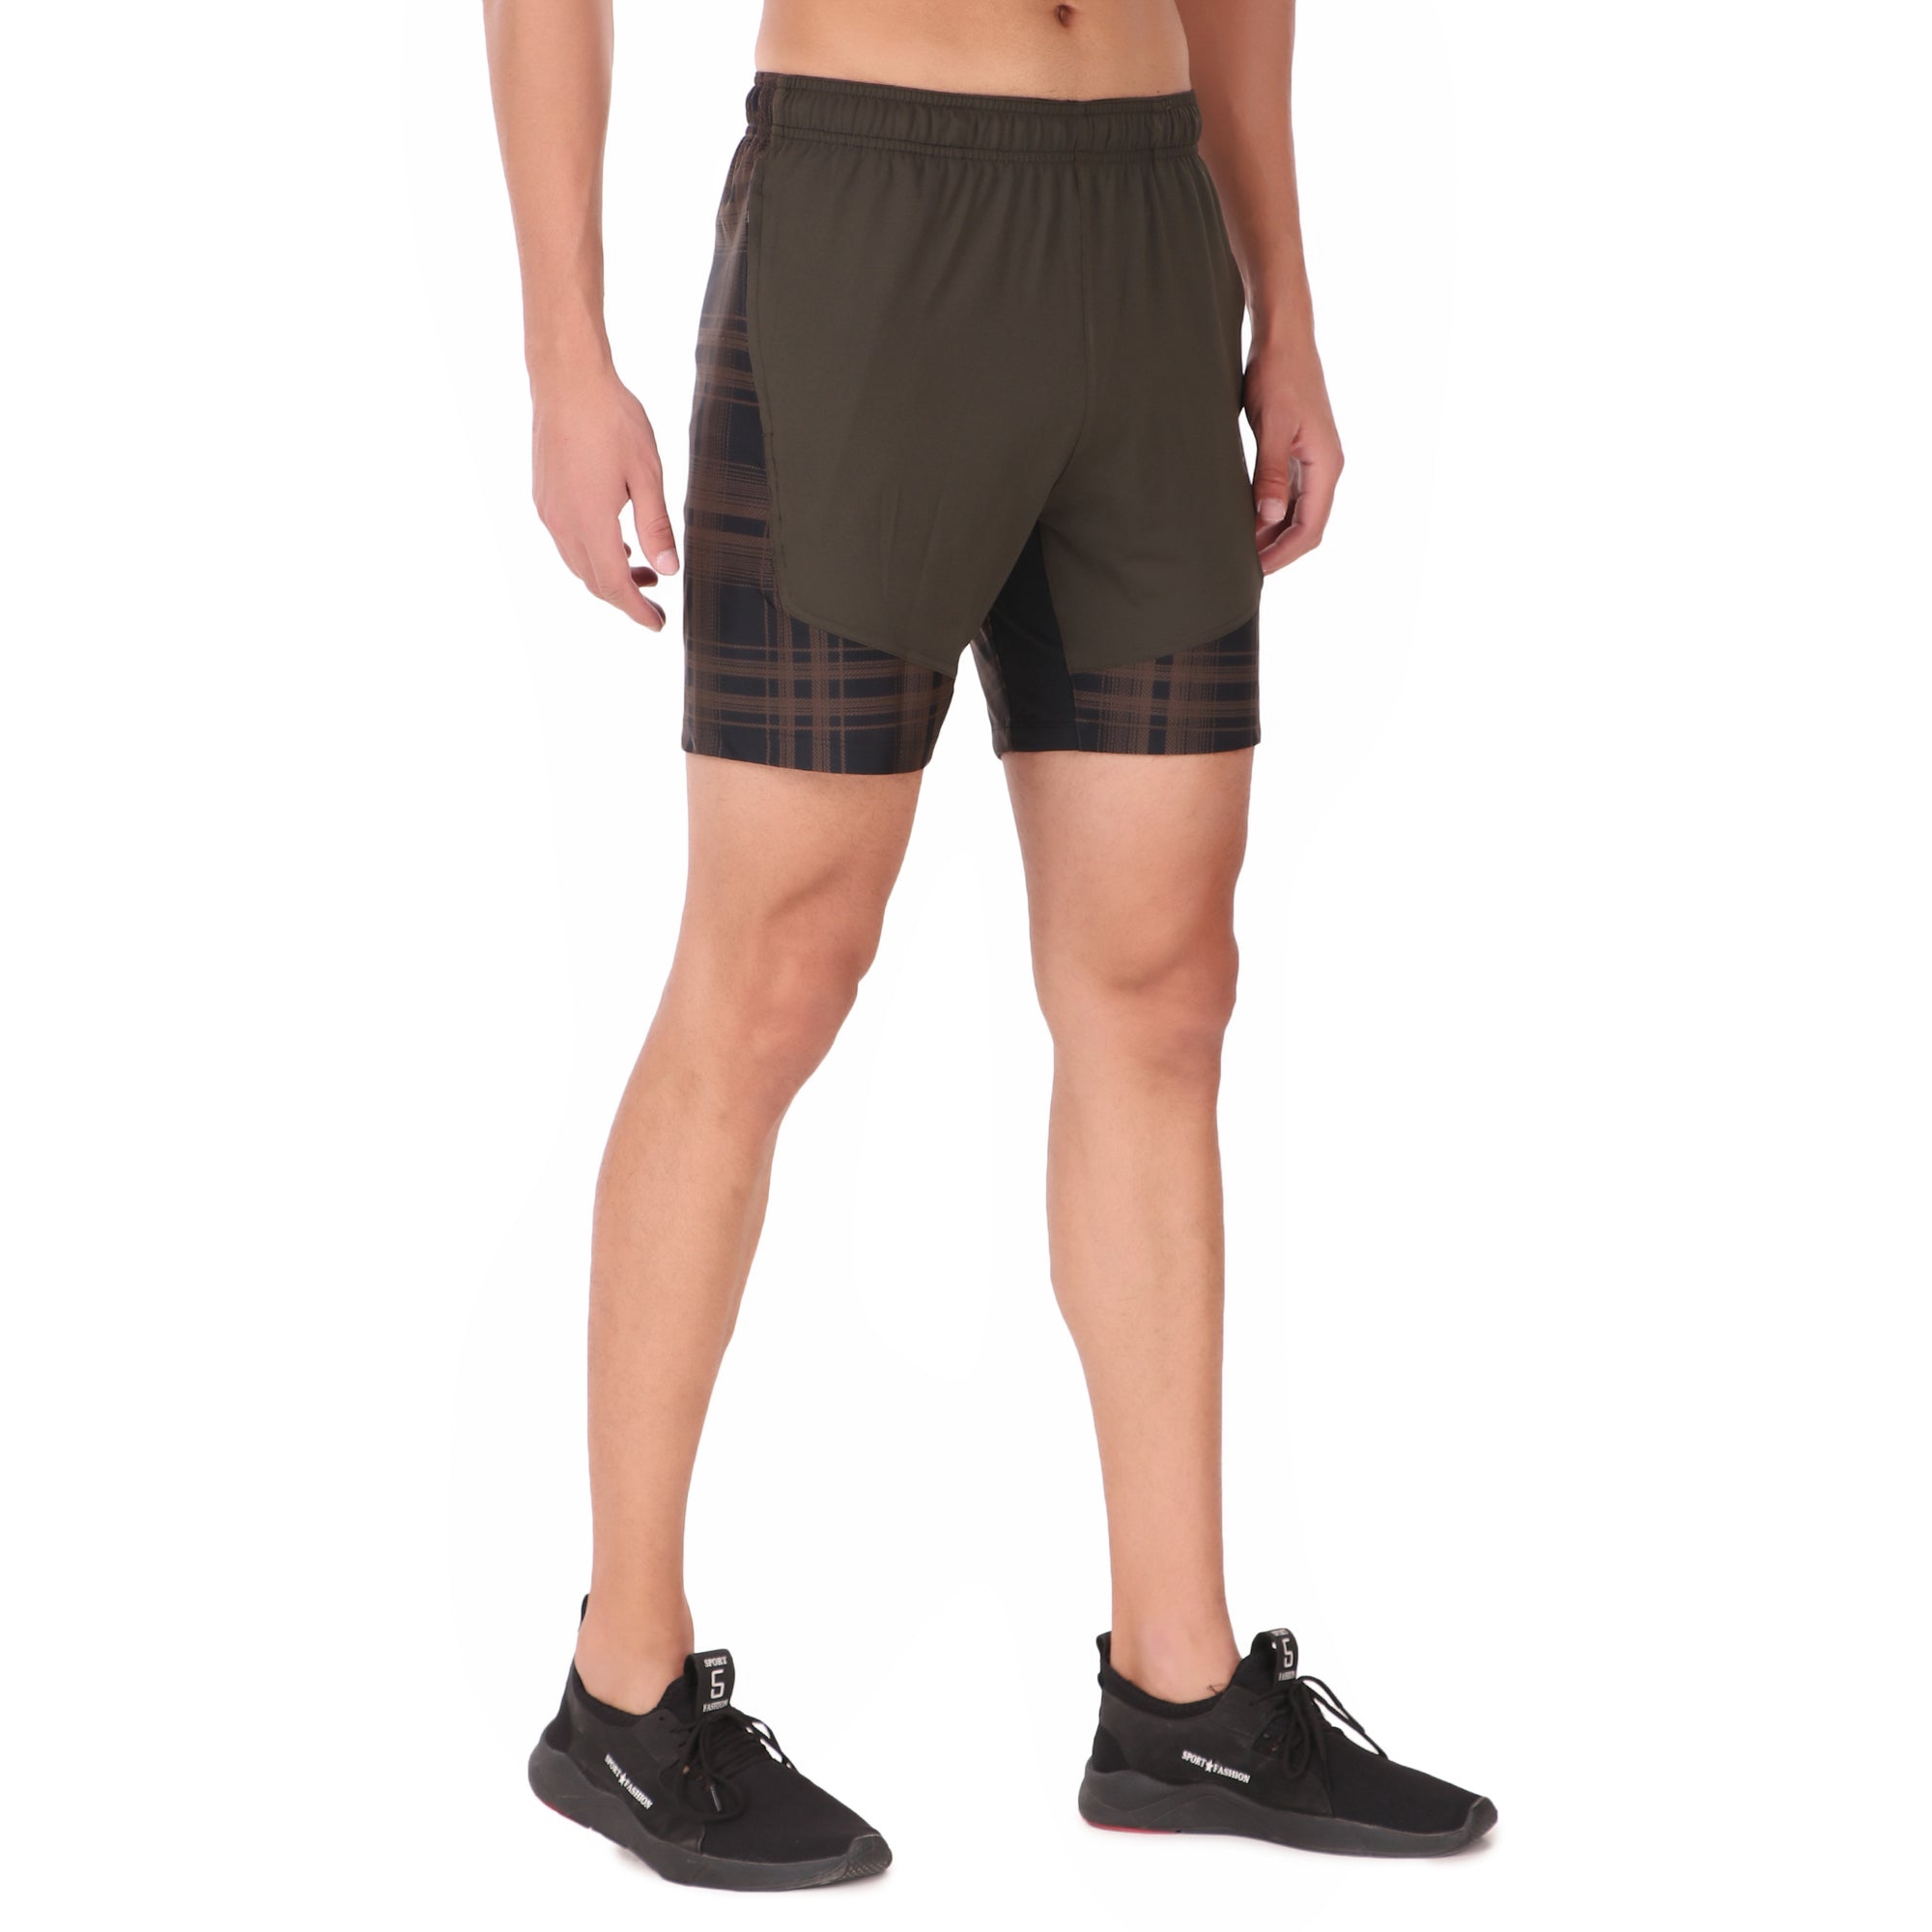 Omega Shorts For Men Zip Pockets (Military Plade)